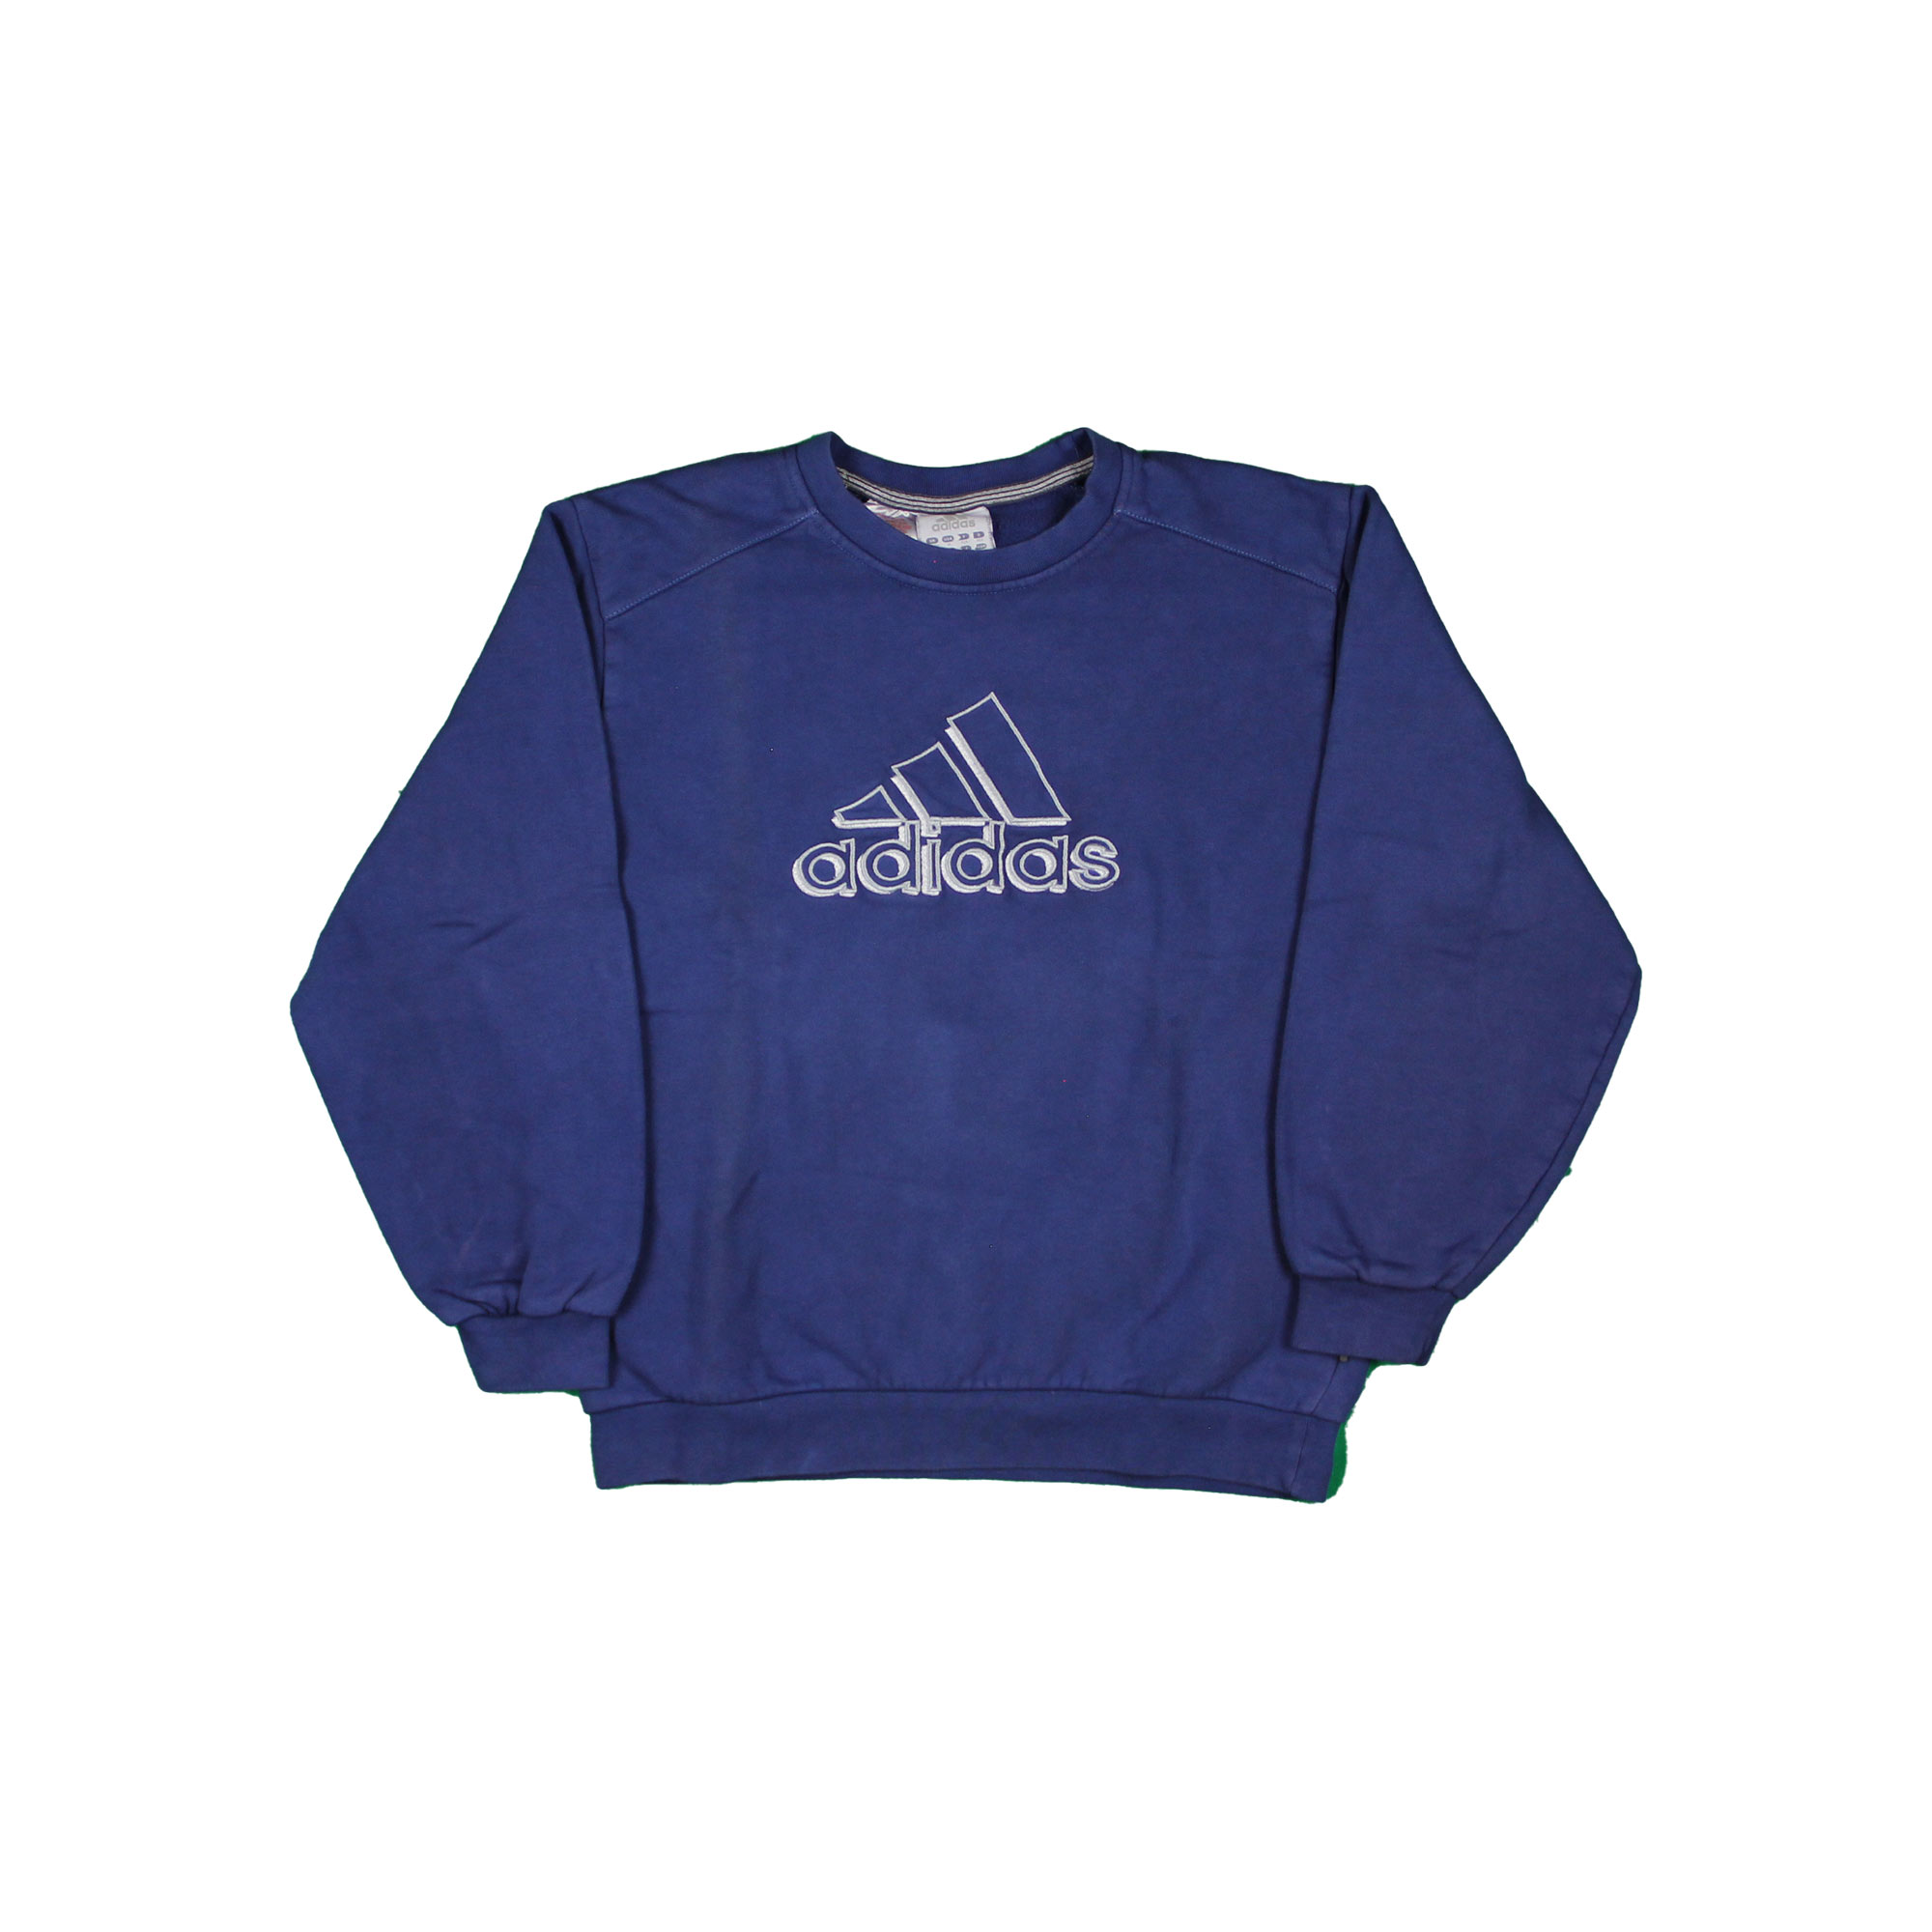 Adidas Embroidered Sweatshirt - Kids Size